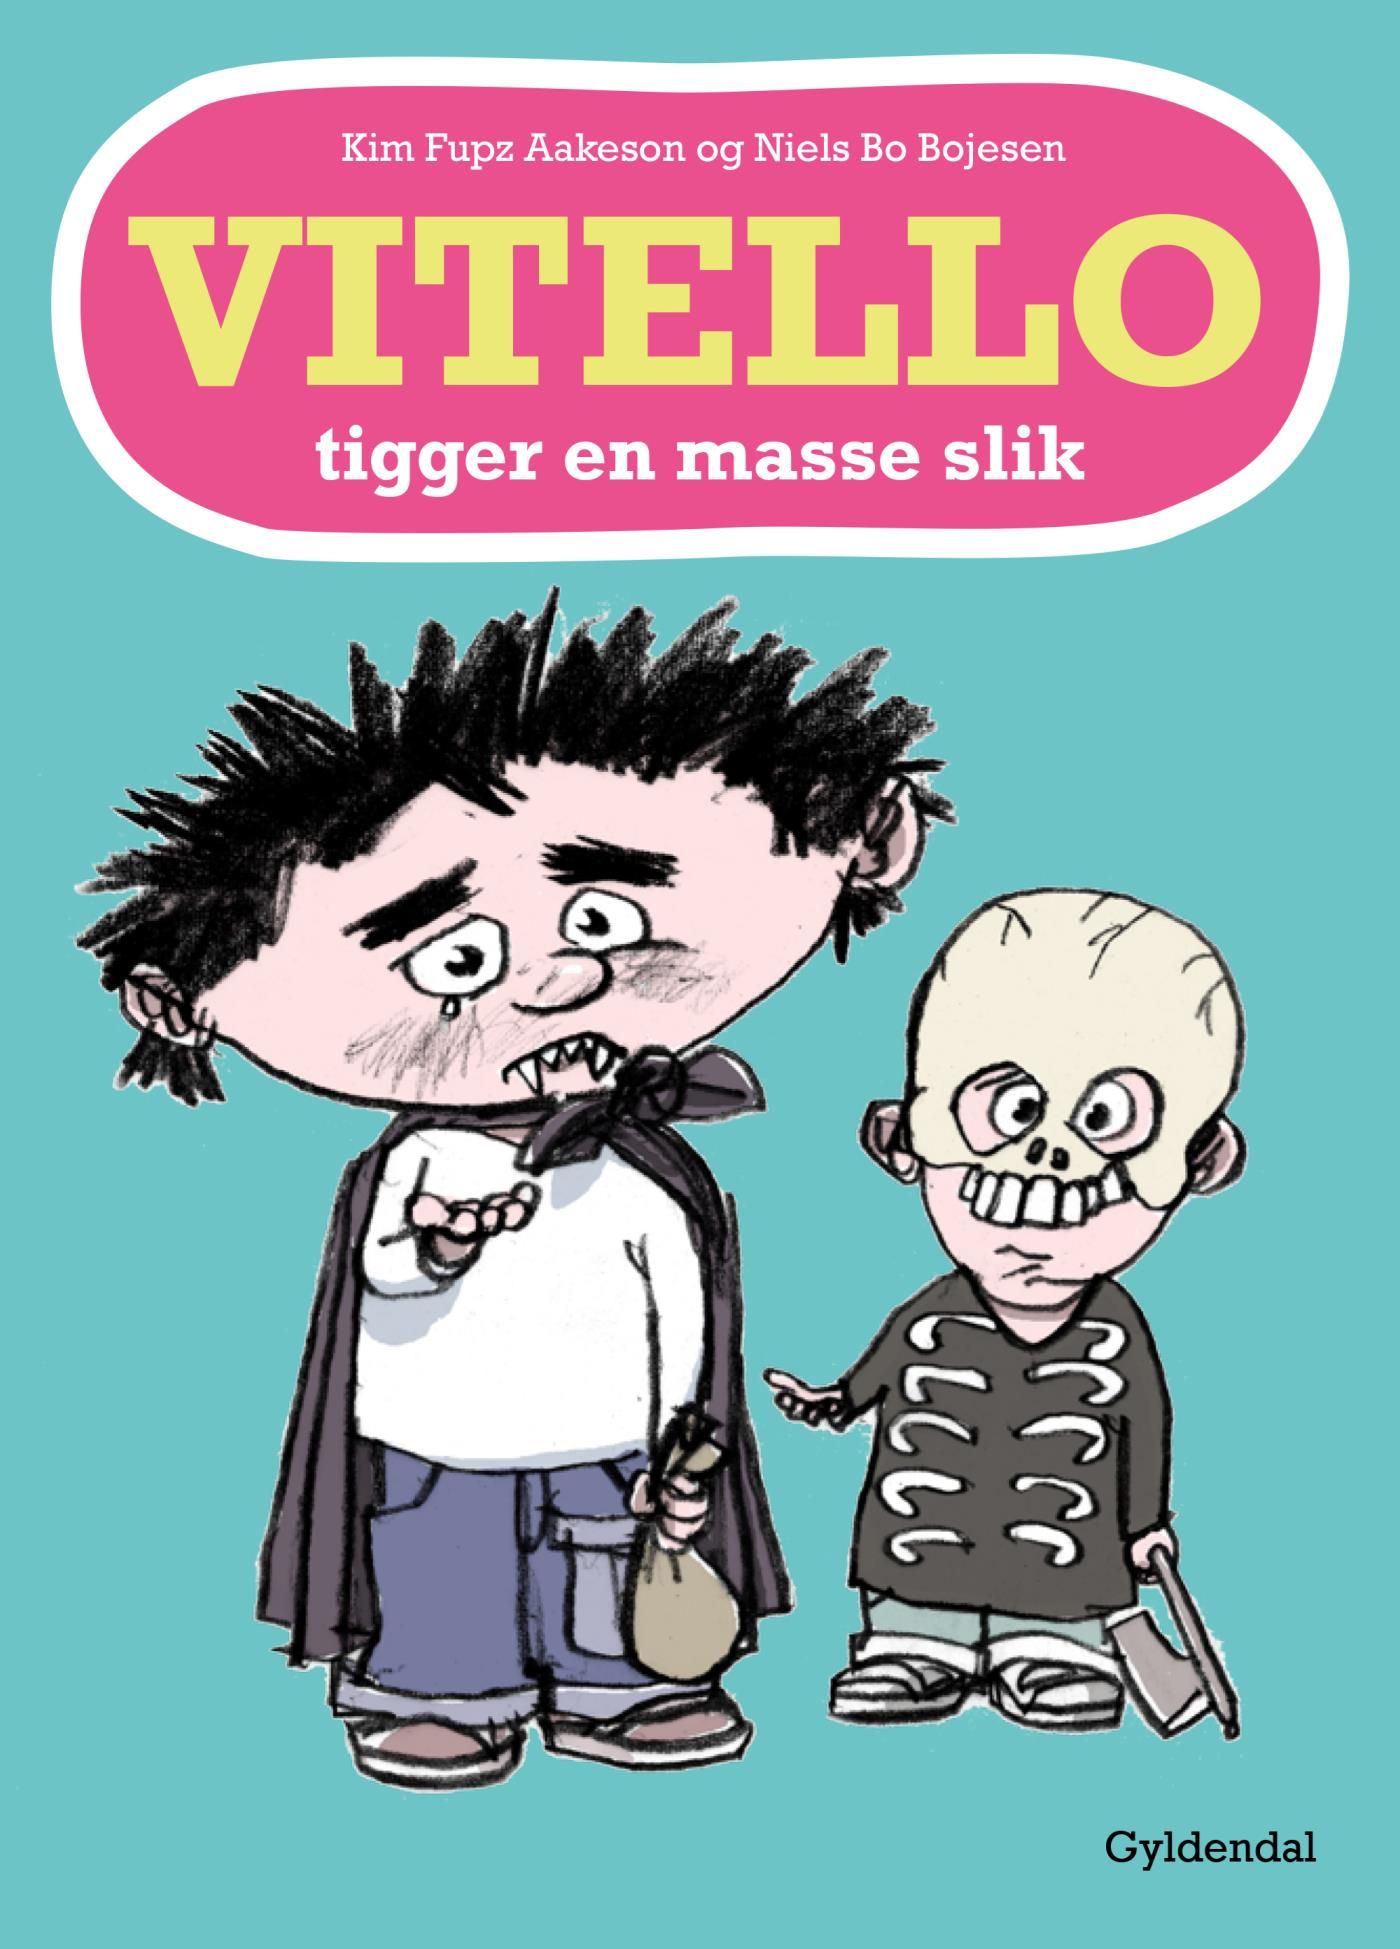 Vitello tigger en masse slik - Lyt&læs, e-bog af Niels Bo Bojesen, Kim Fupz Aakeson